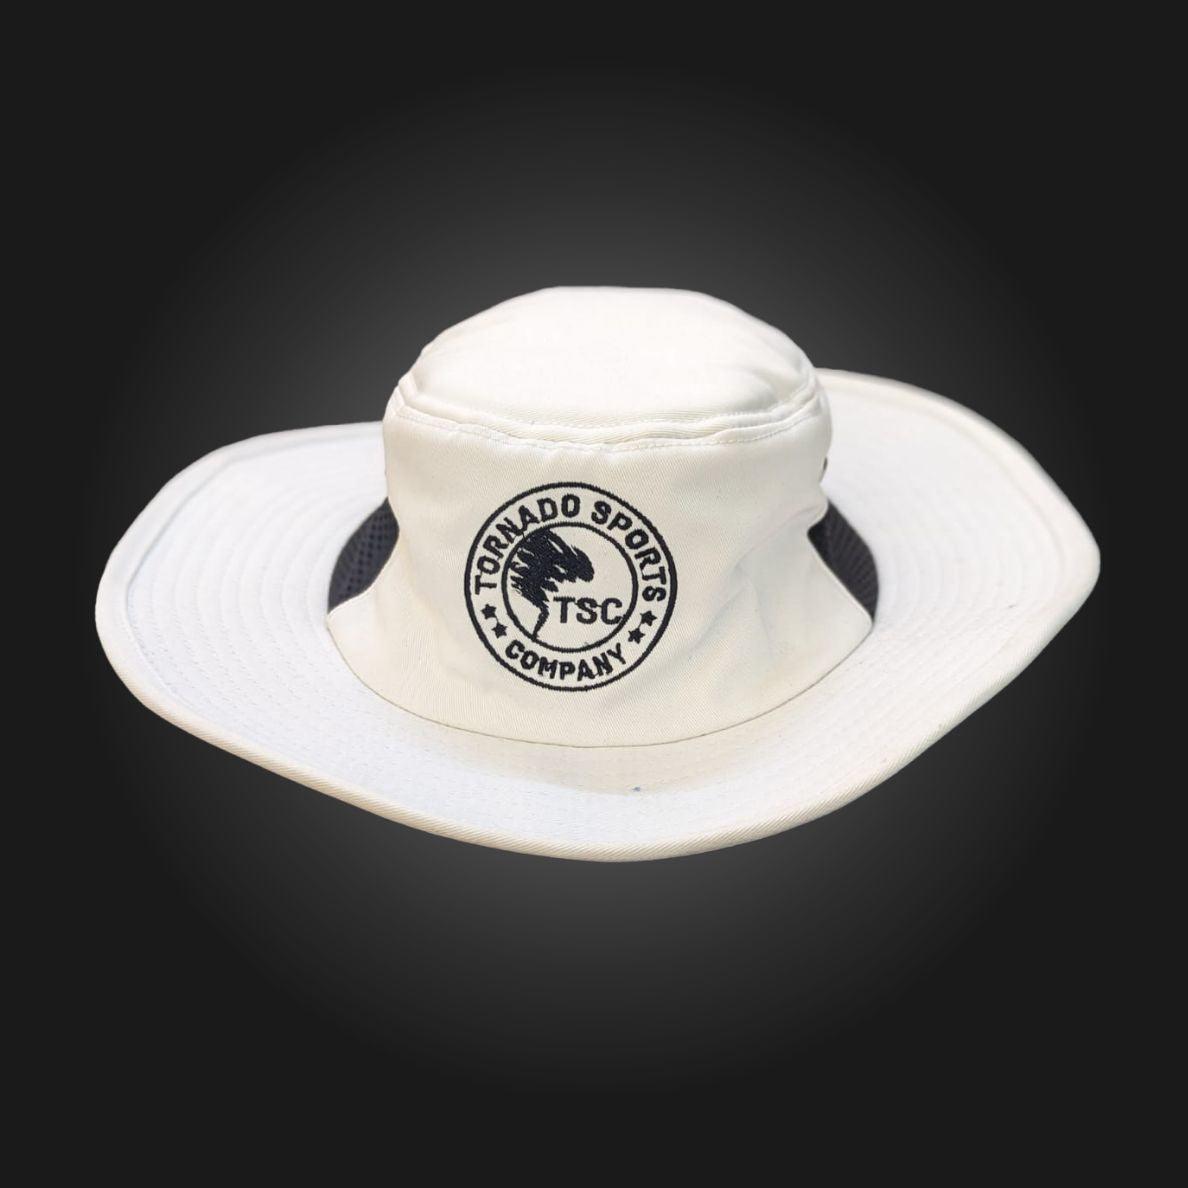 Floppy hat - cricket caps - Sports Caps in United States - best brand sports wear